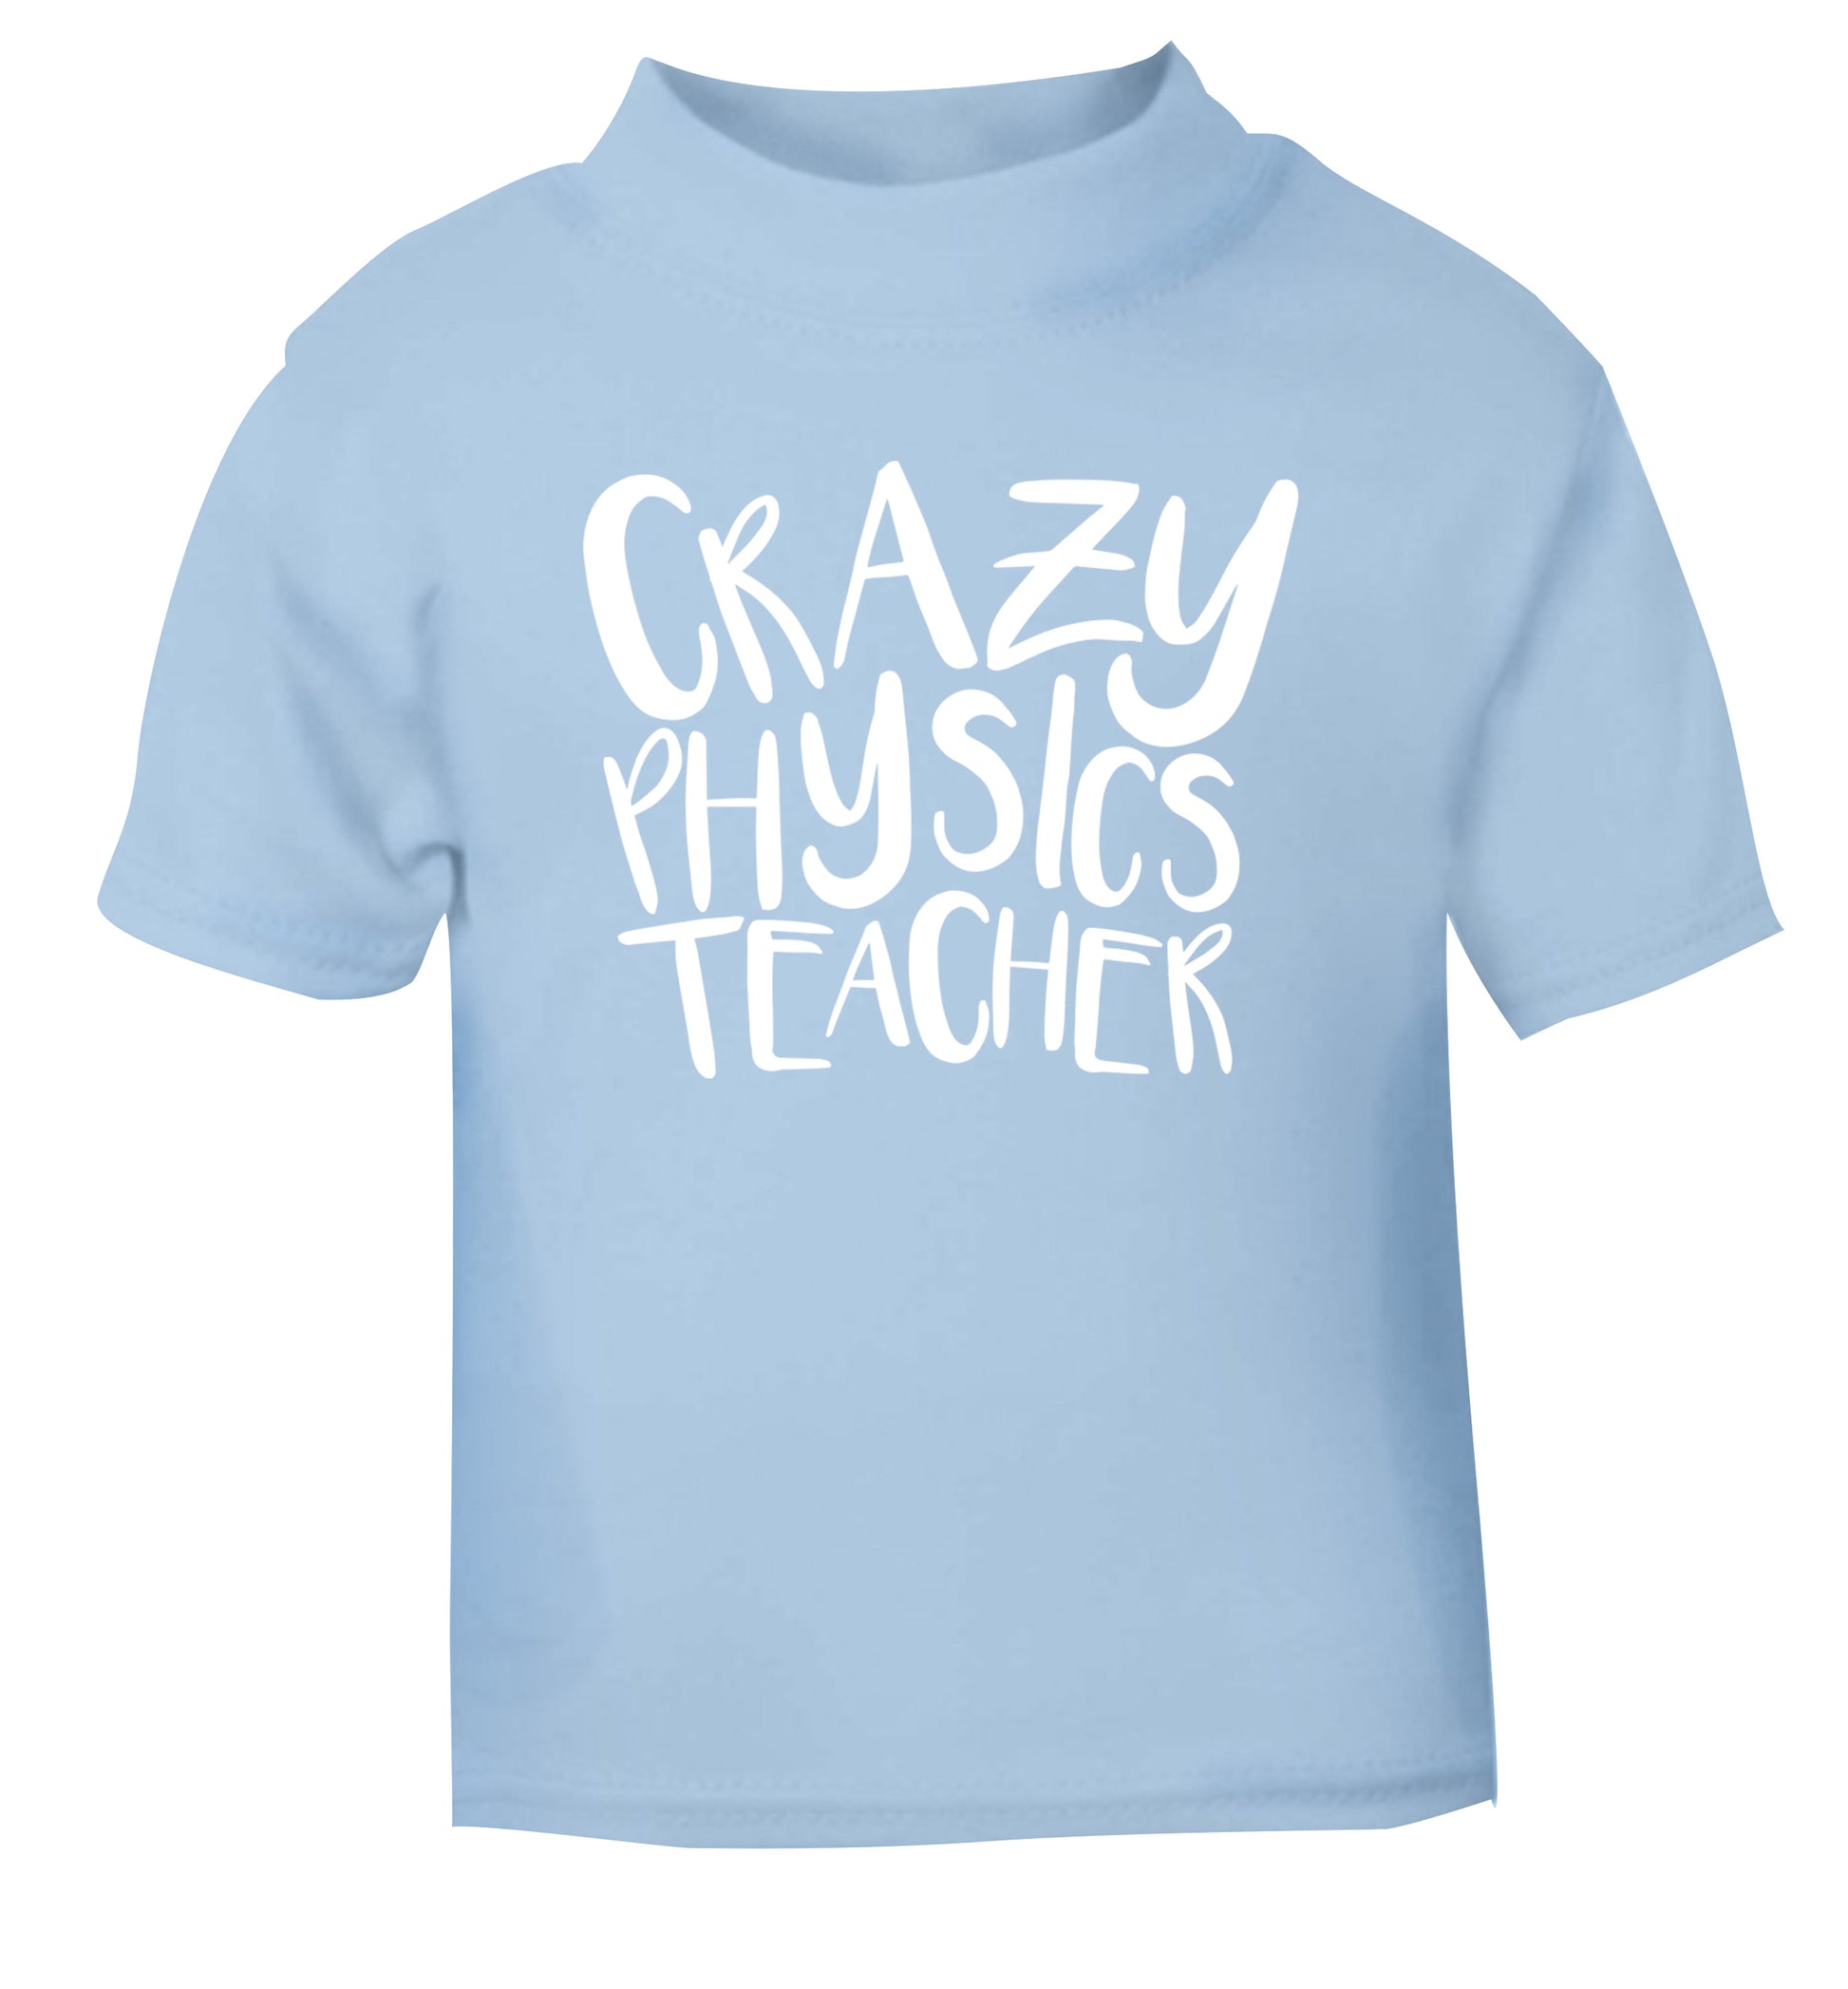 Crazy physics teacher light blue Baby Toddler Tshirt 2 Years